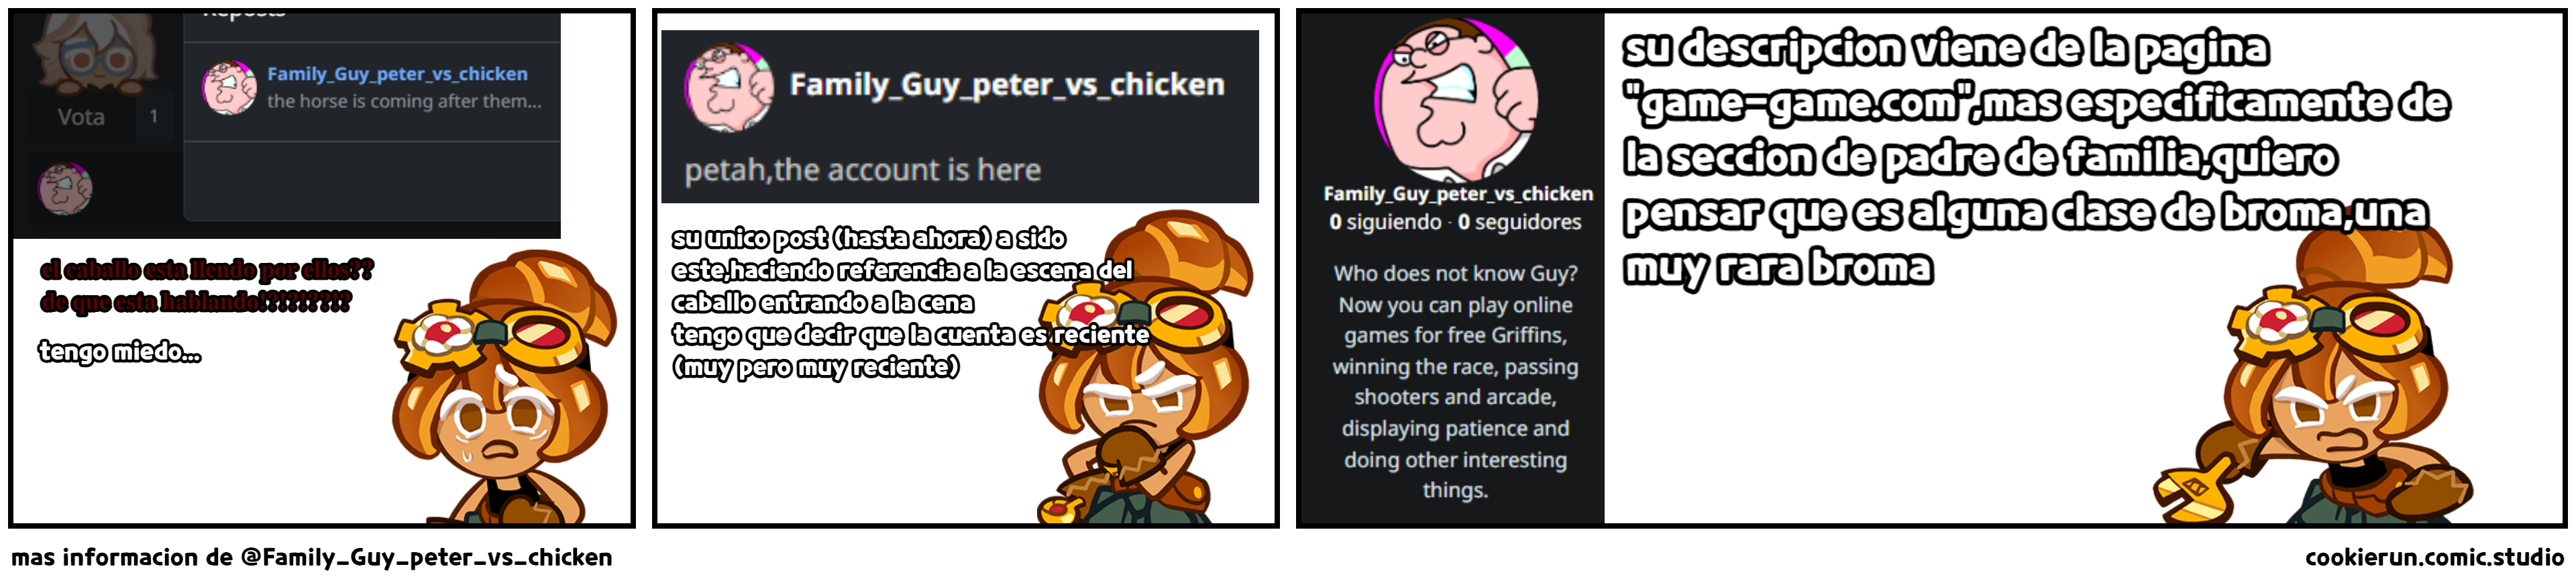 mas informacion de @Family_Guy_peter_vs_chicken